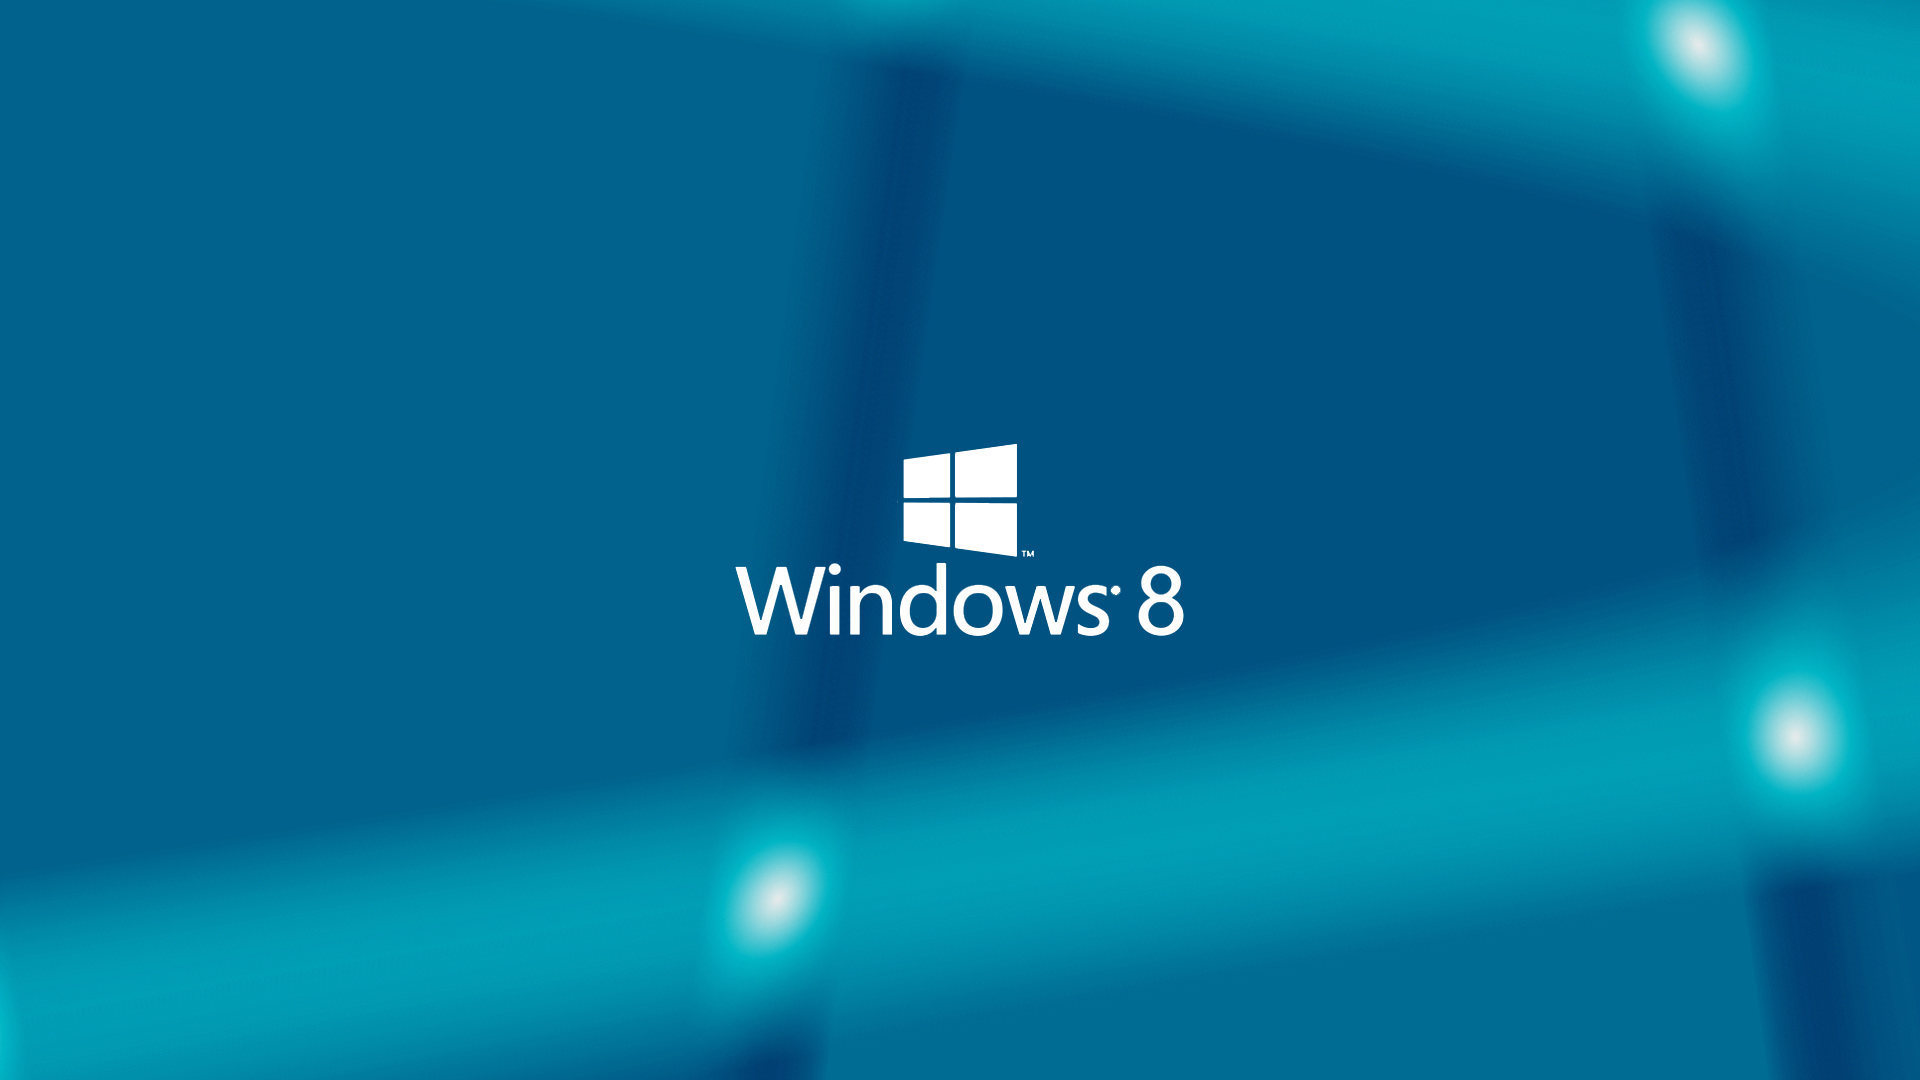 Microsoft Windows 8 Logo Wallpaper   HD Wallpapers